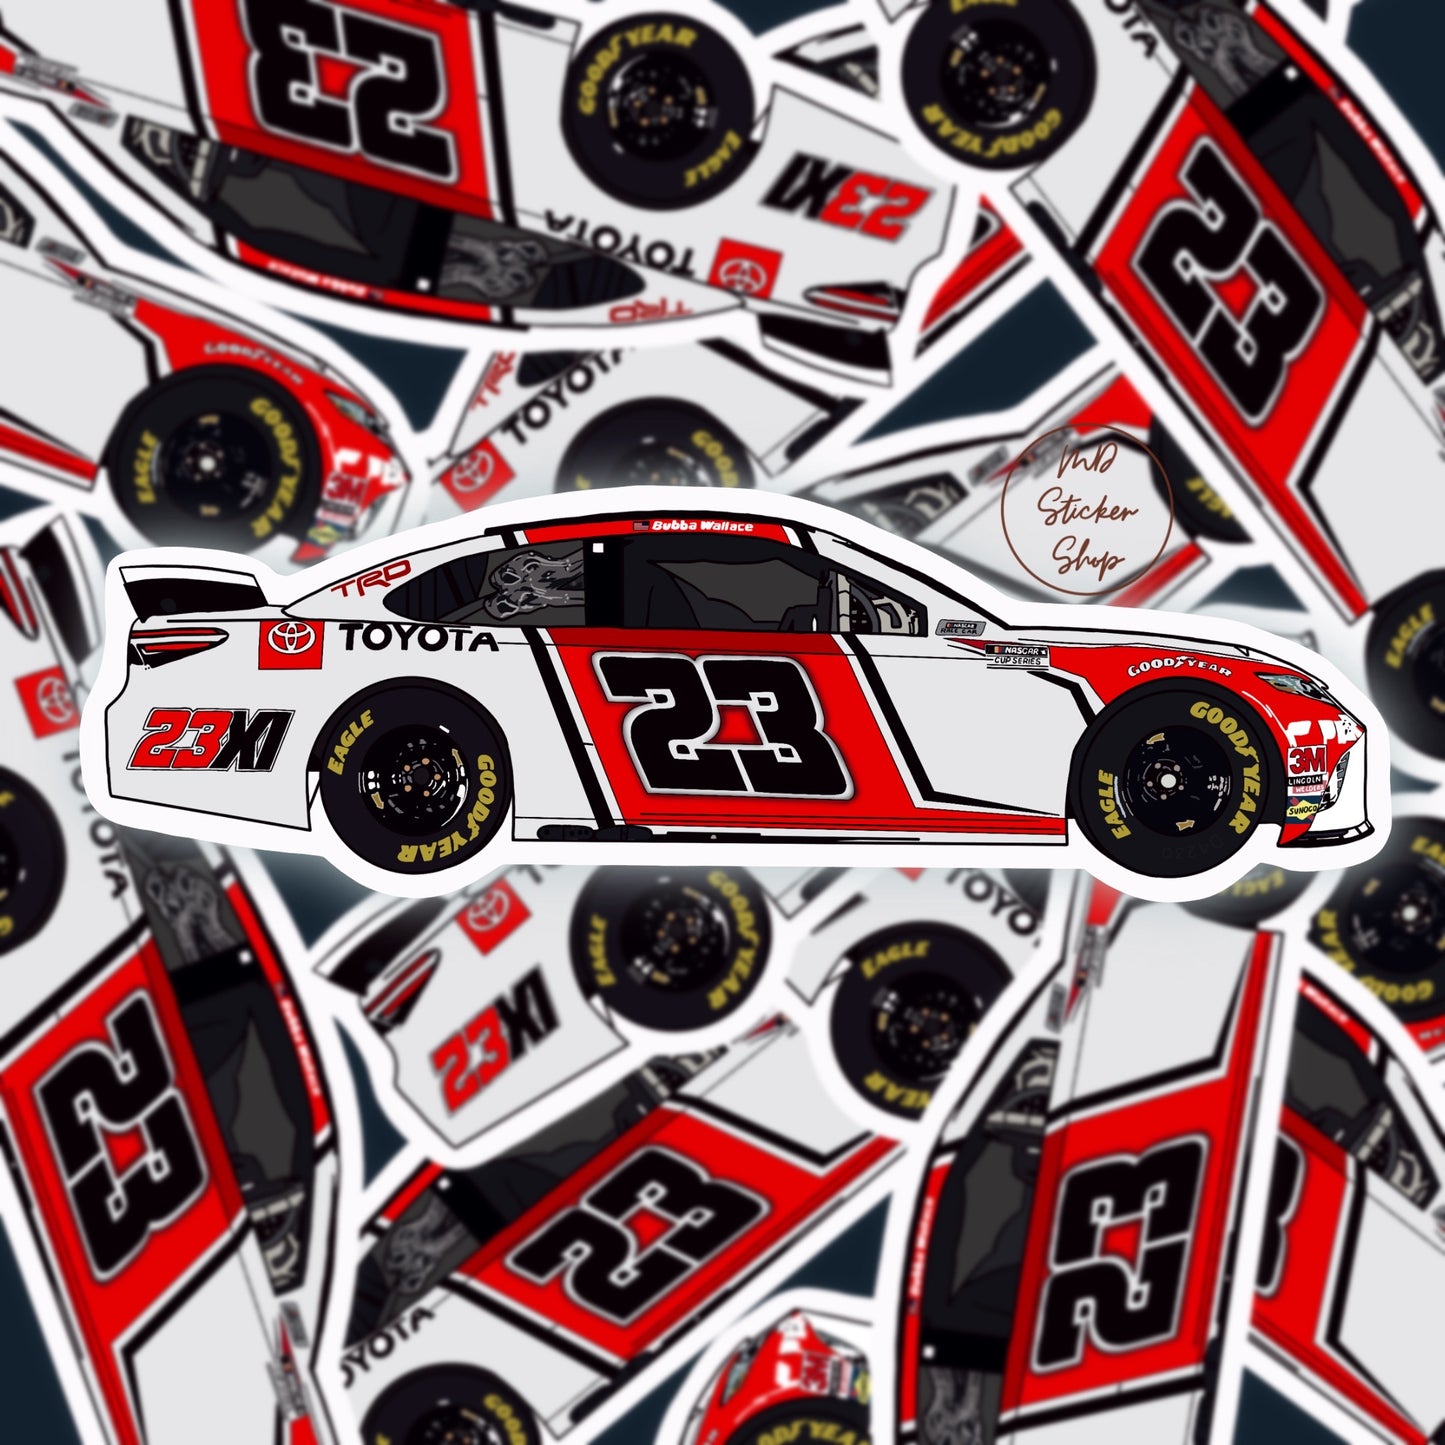 Bubba Wallace #23 23XI Racing NASCAR Cup Series Car Sticker